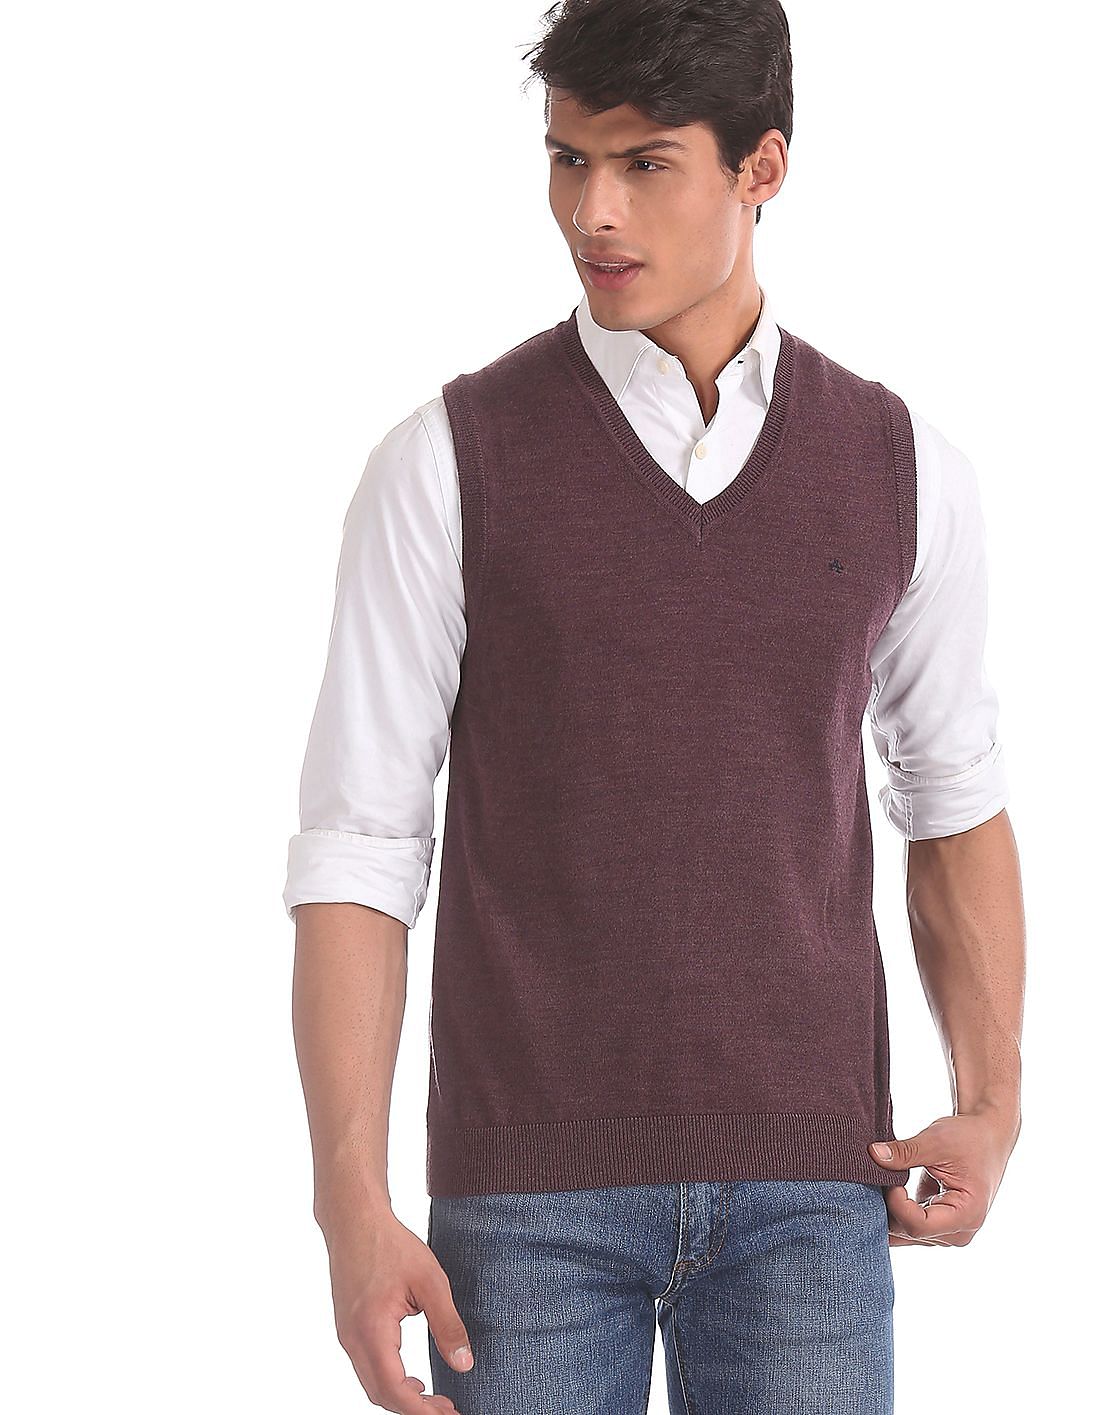 Buy Men Purple V-Neck Sleeveless Sweater online at NNNOW.com